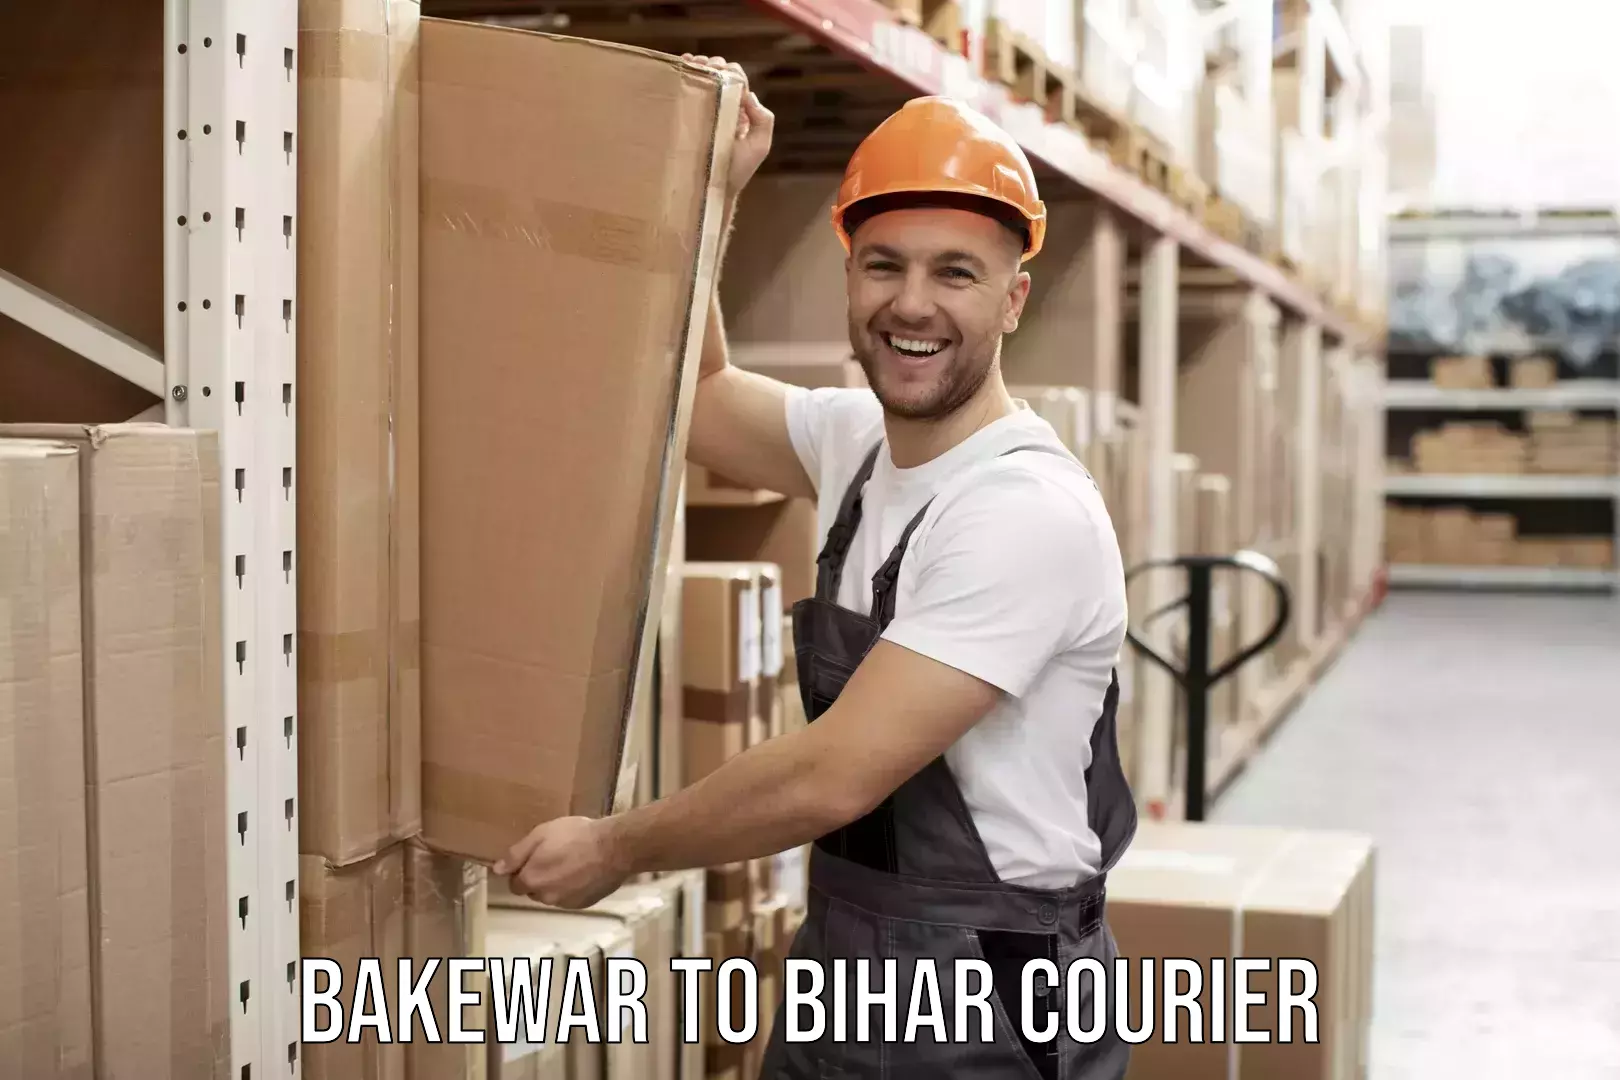 Professional moving assistance Bakewar to Bihar